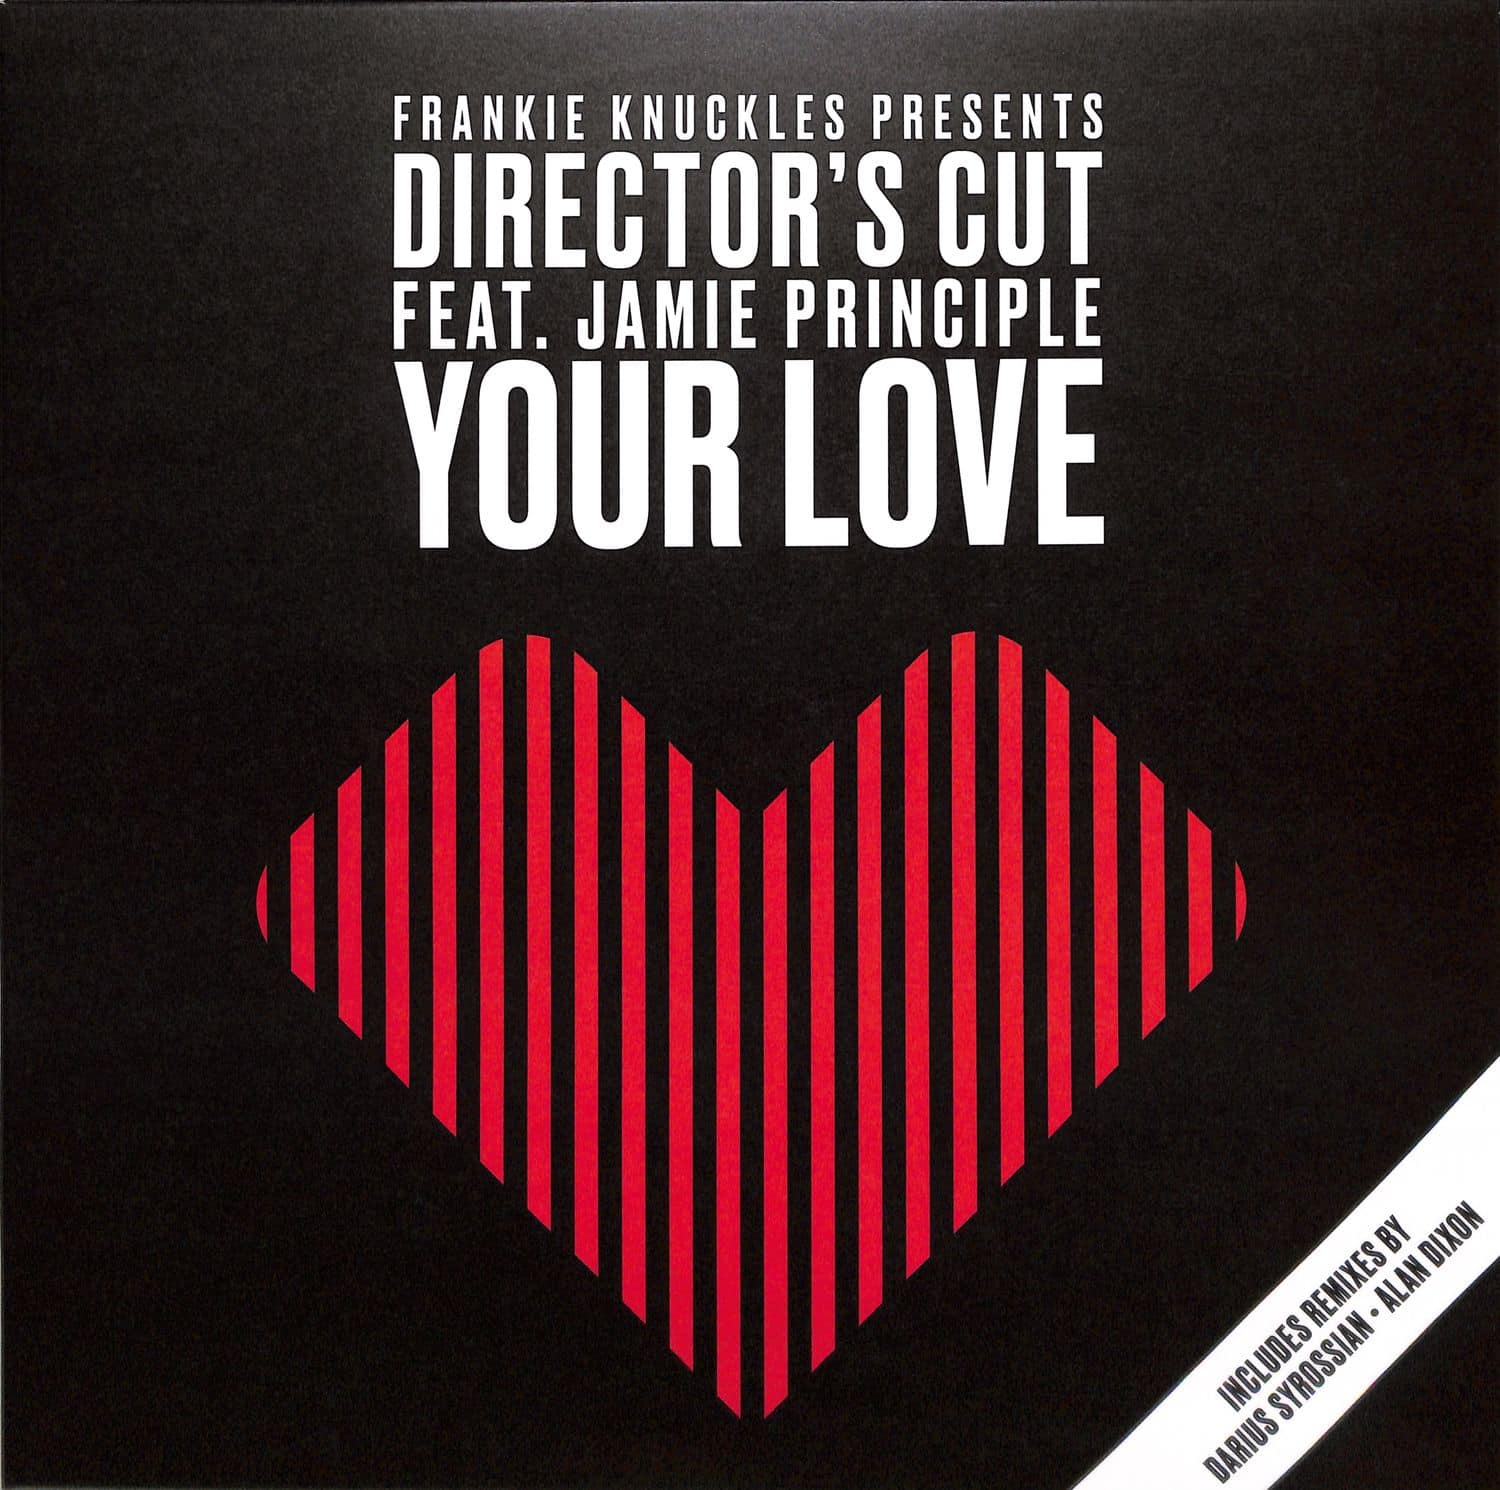 Frankie Knuckles pres Directors Cut Featuring Jamie Principle - YOUR LOVE